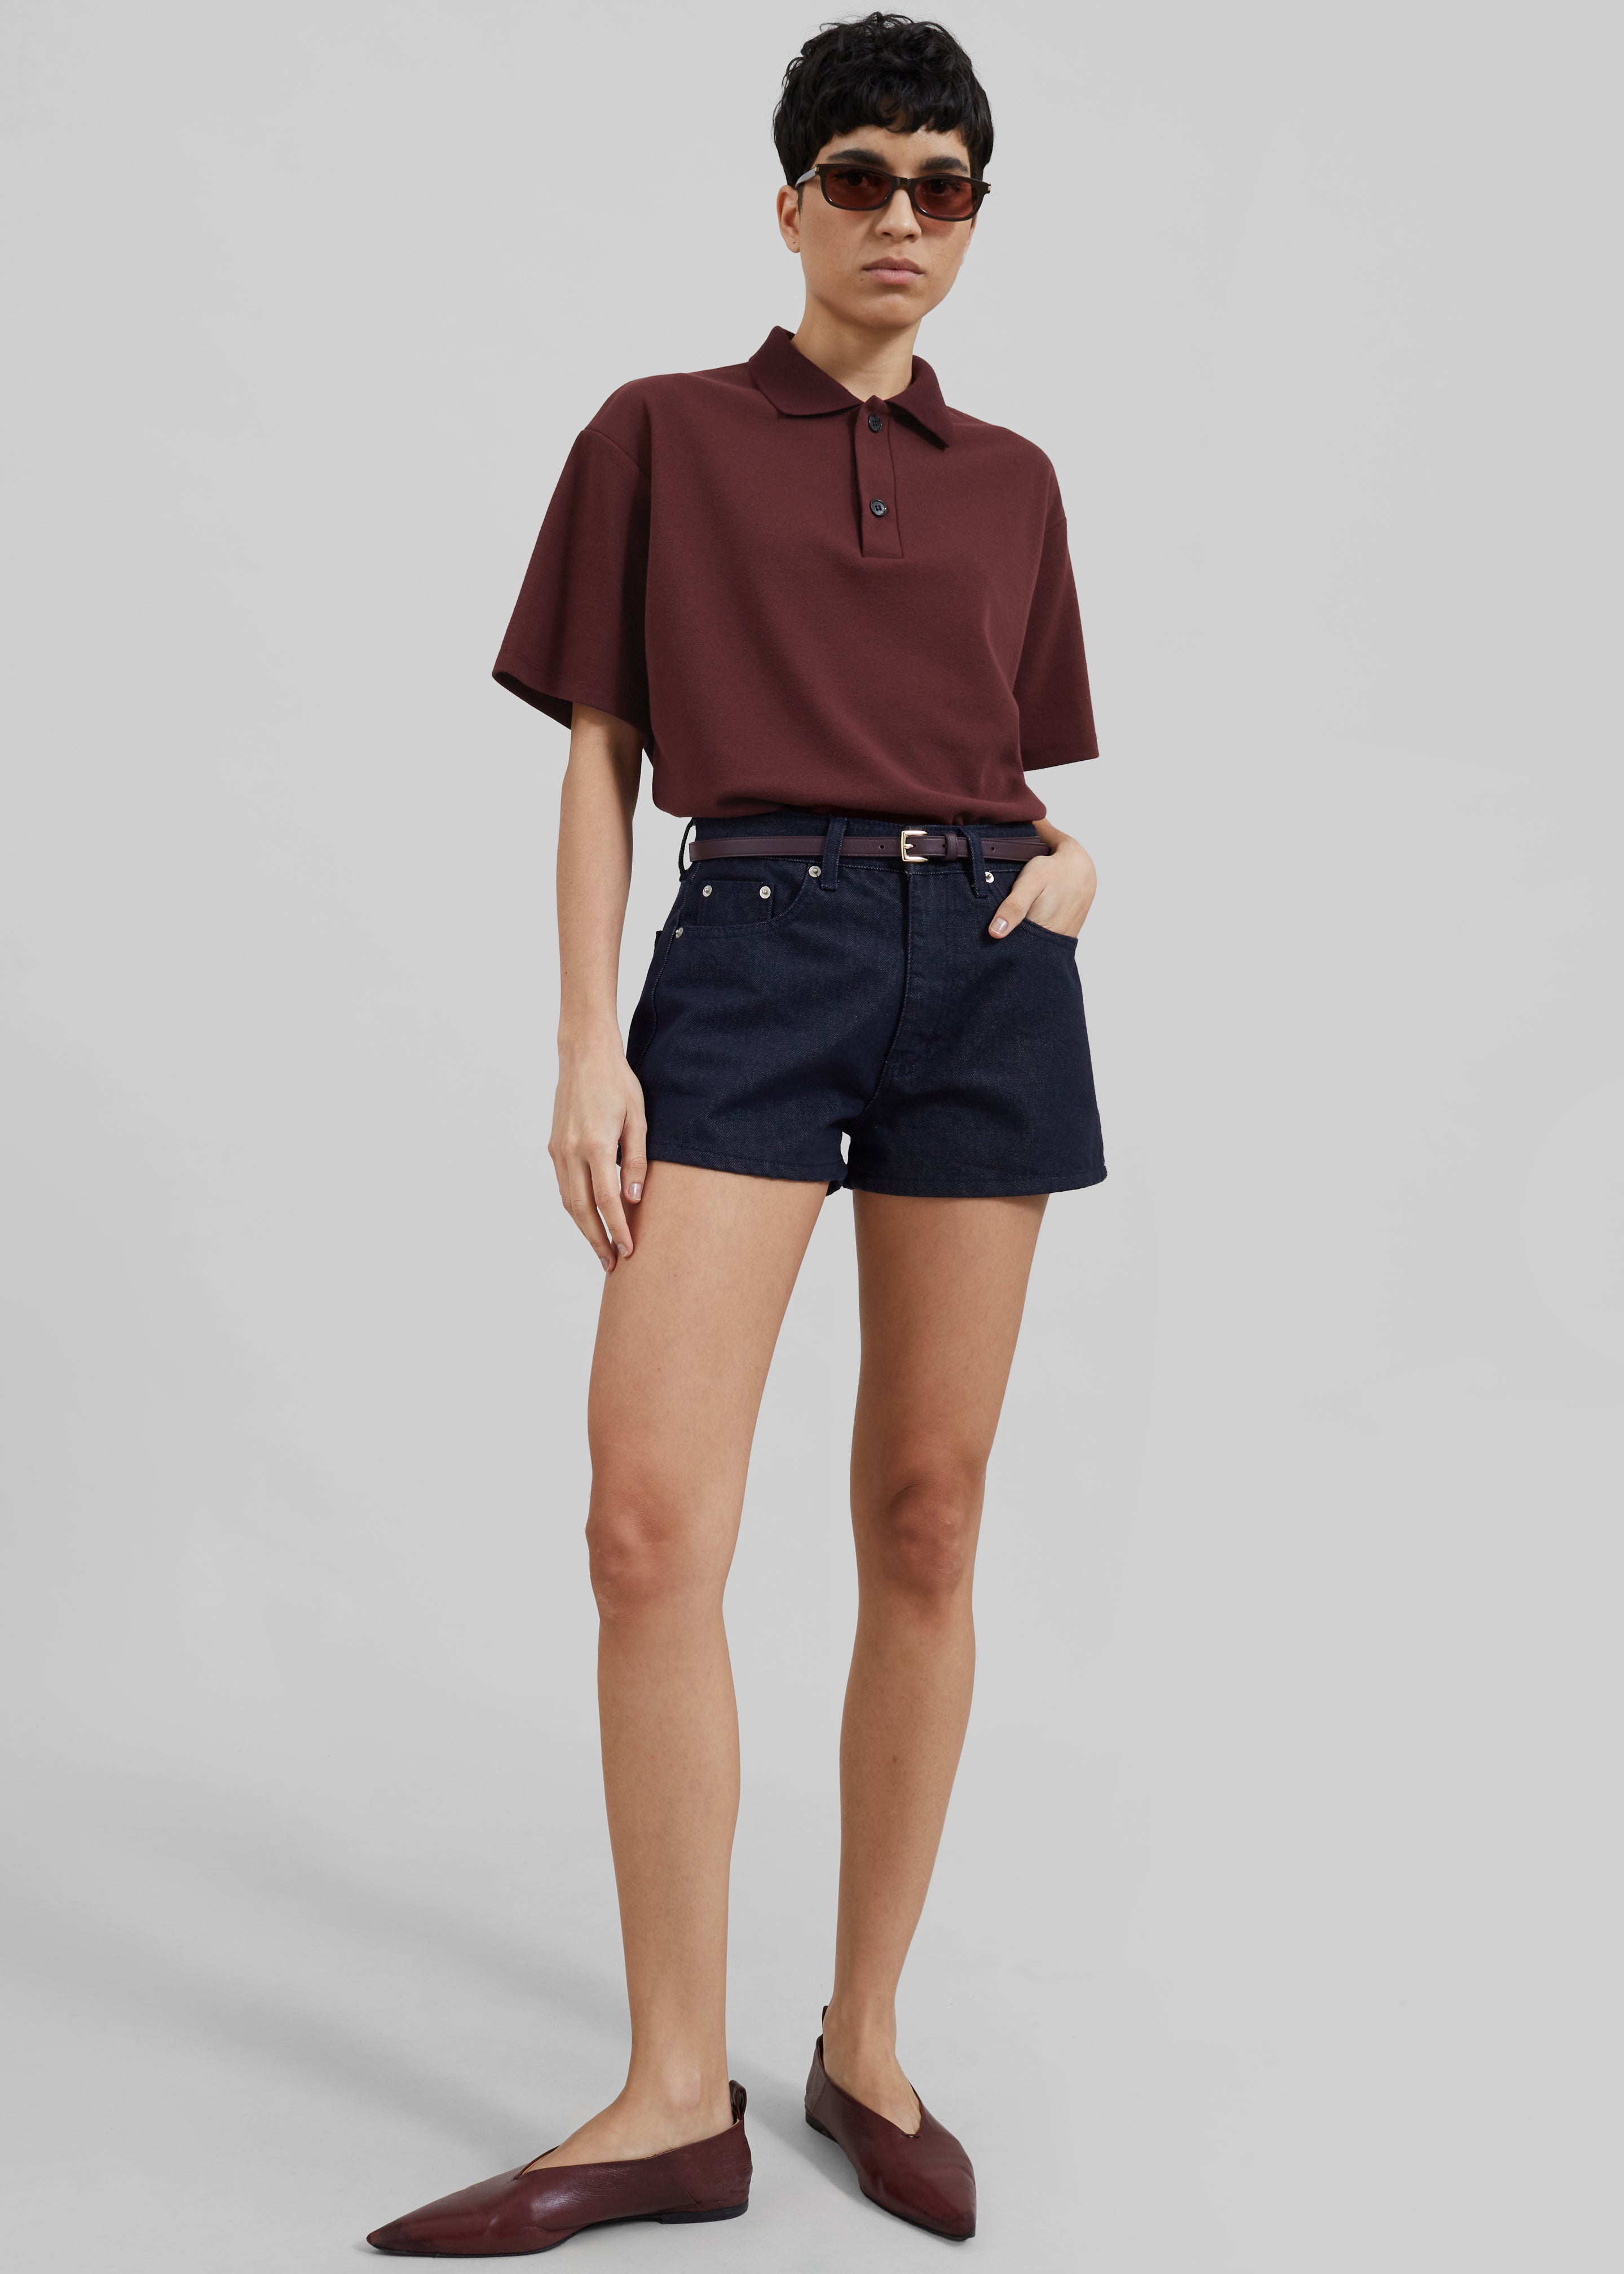 Dianne Polo Shirt - Burgundy - 7